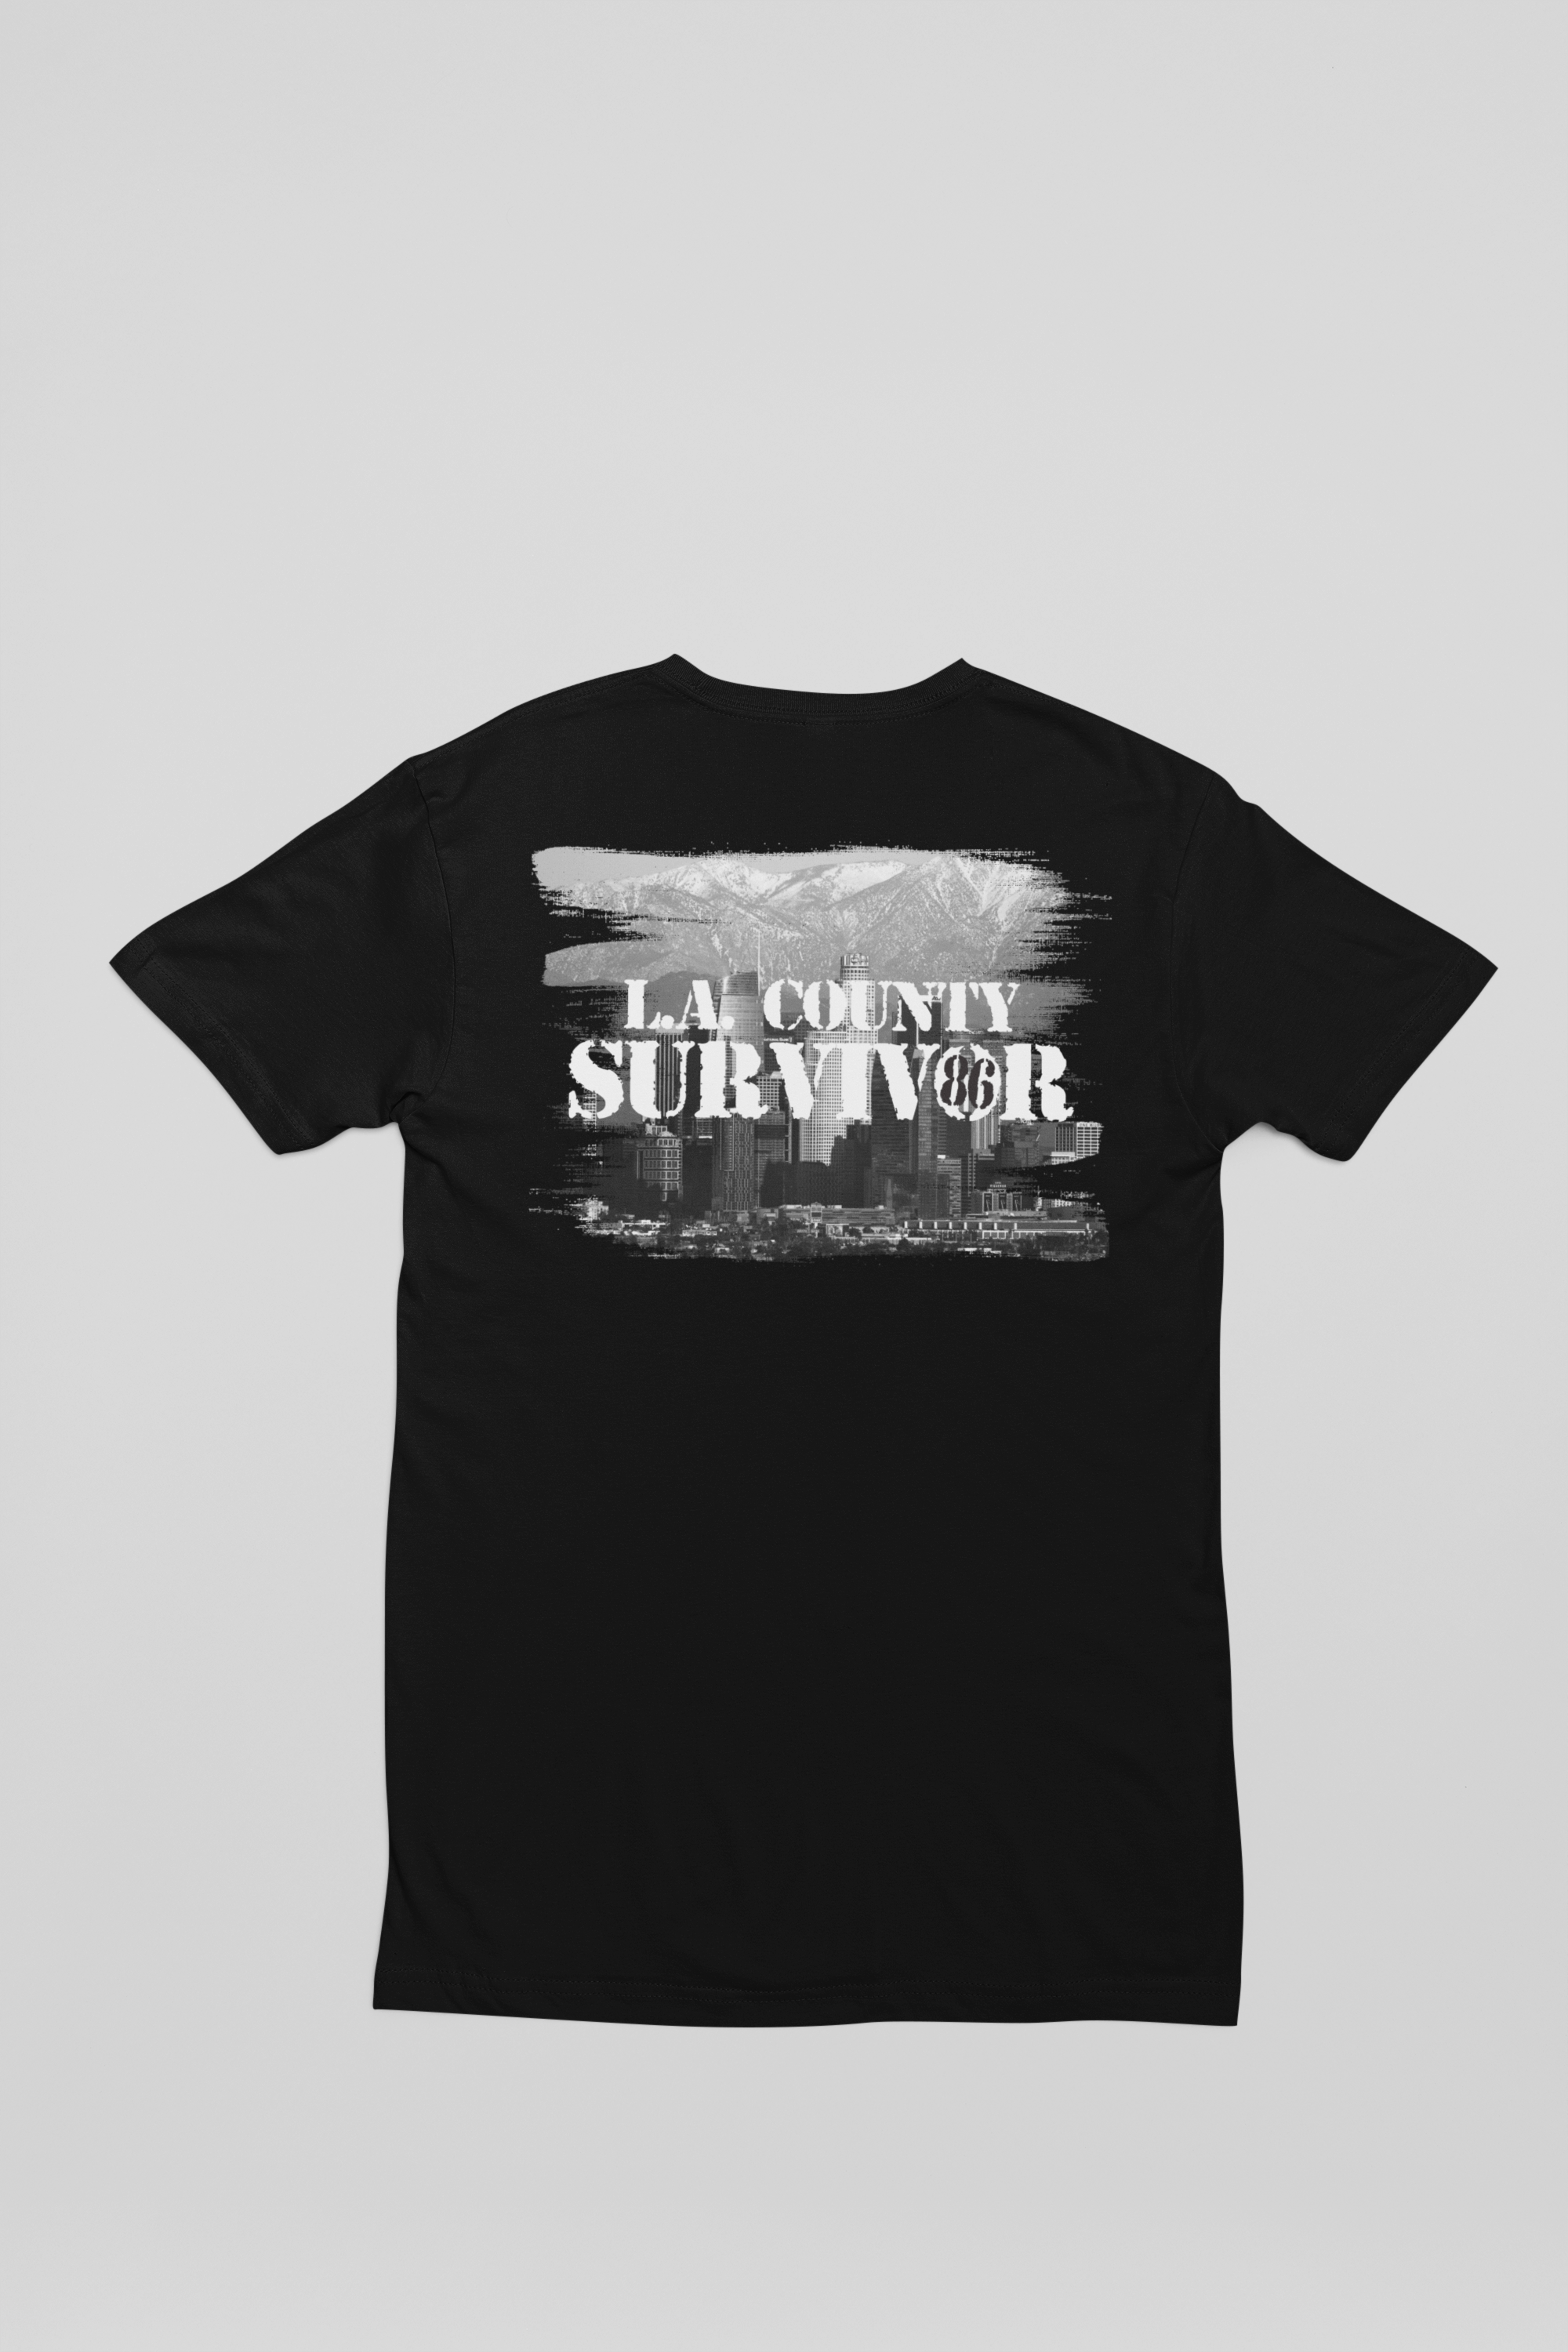 86ers LA County Survivor Short-Sleeve T-Shirt